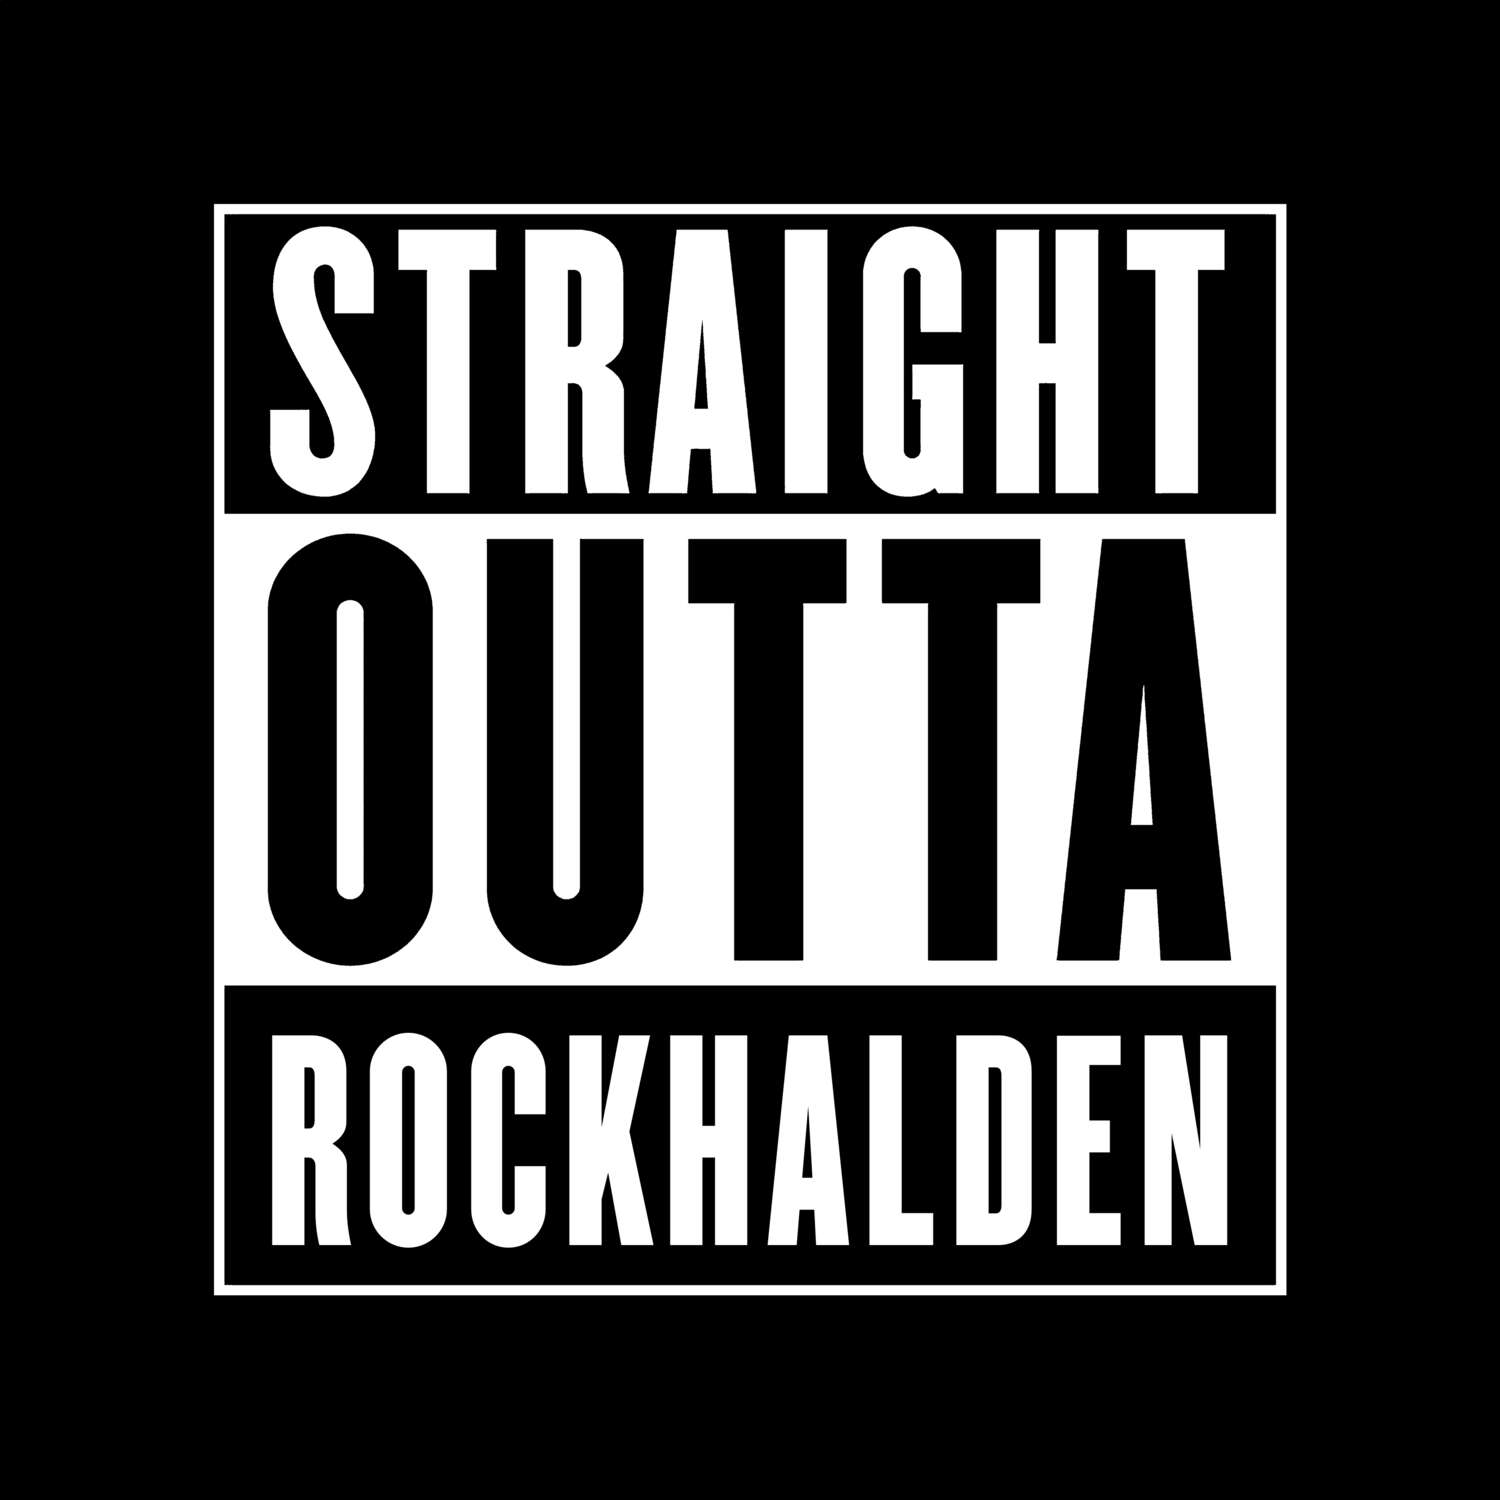 Rockhalden T-Shirt »Straight Outta«